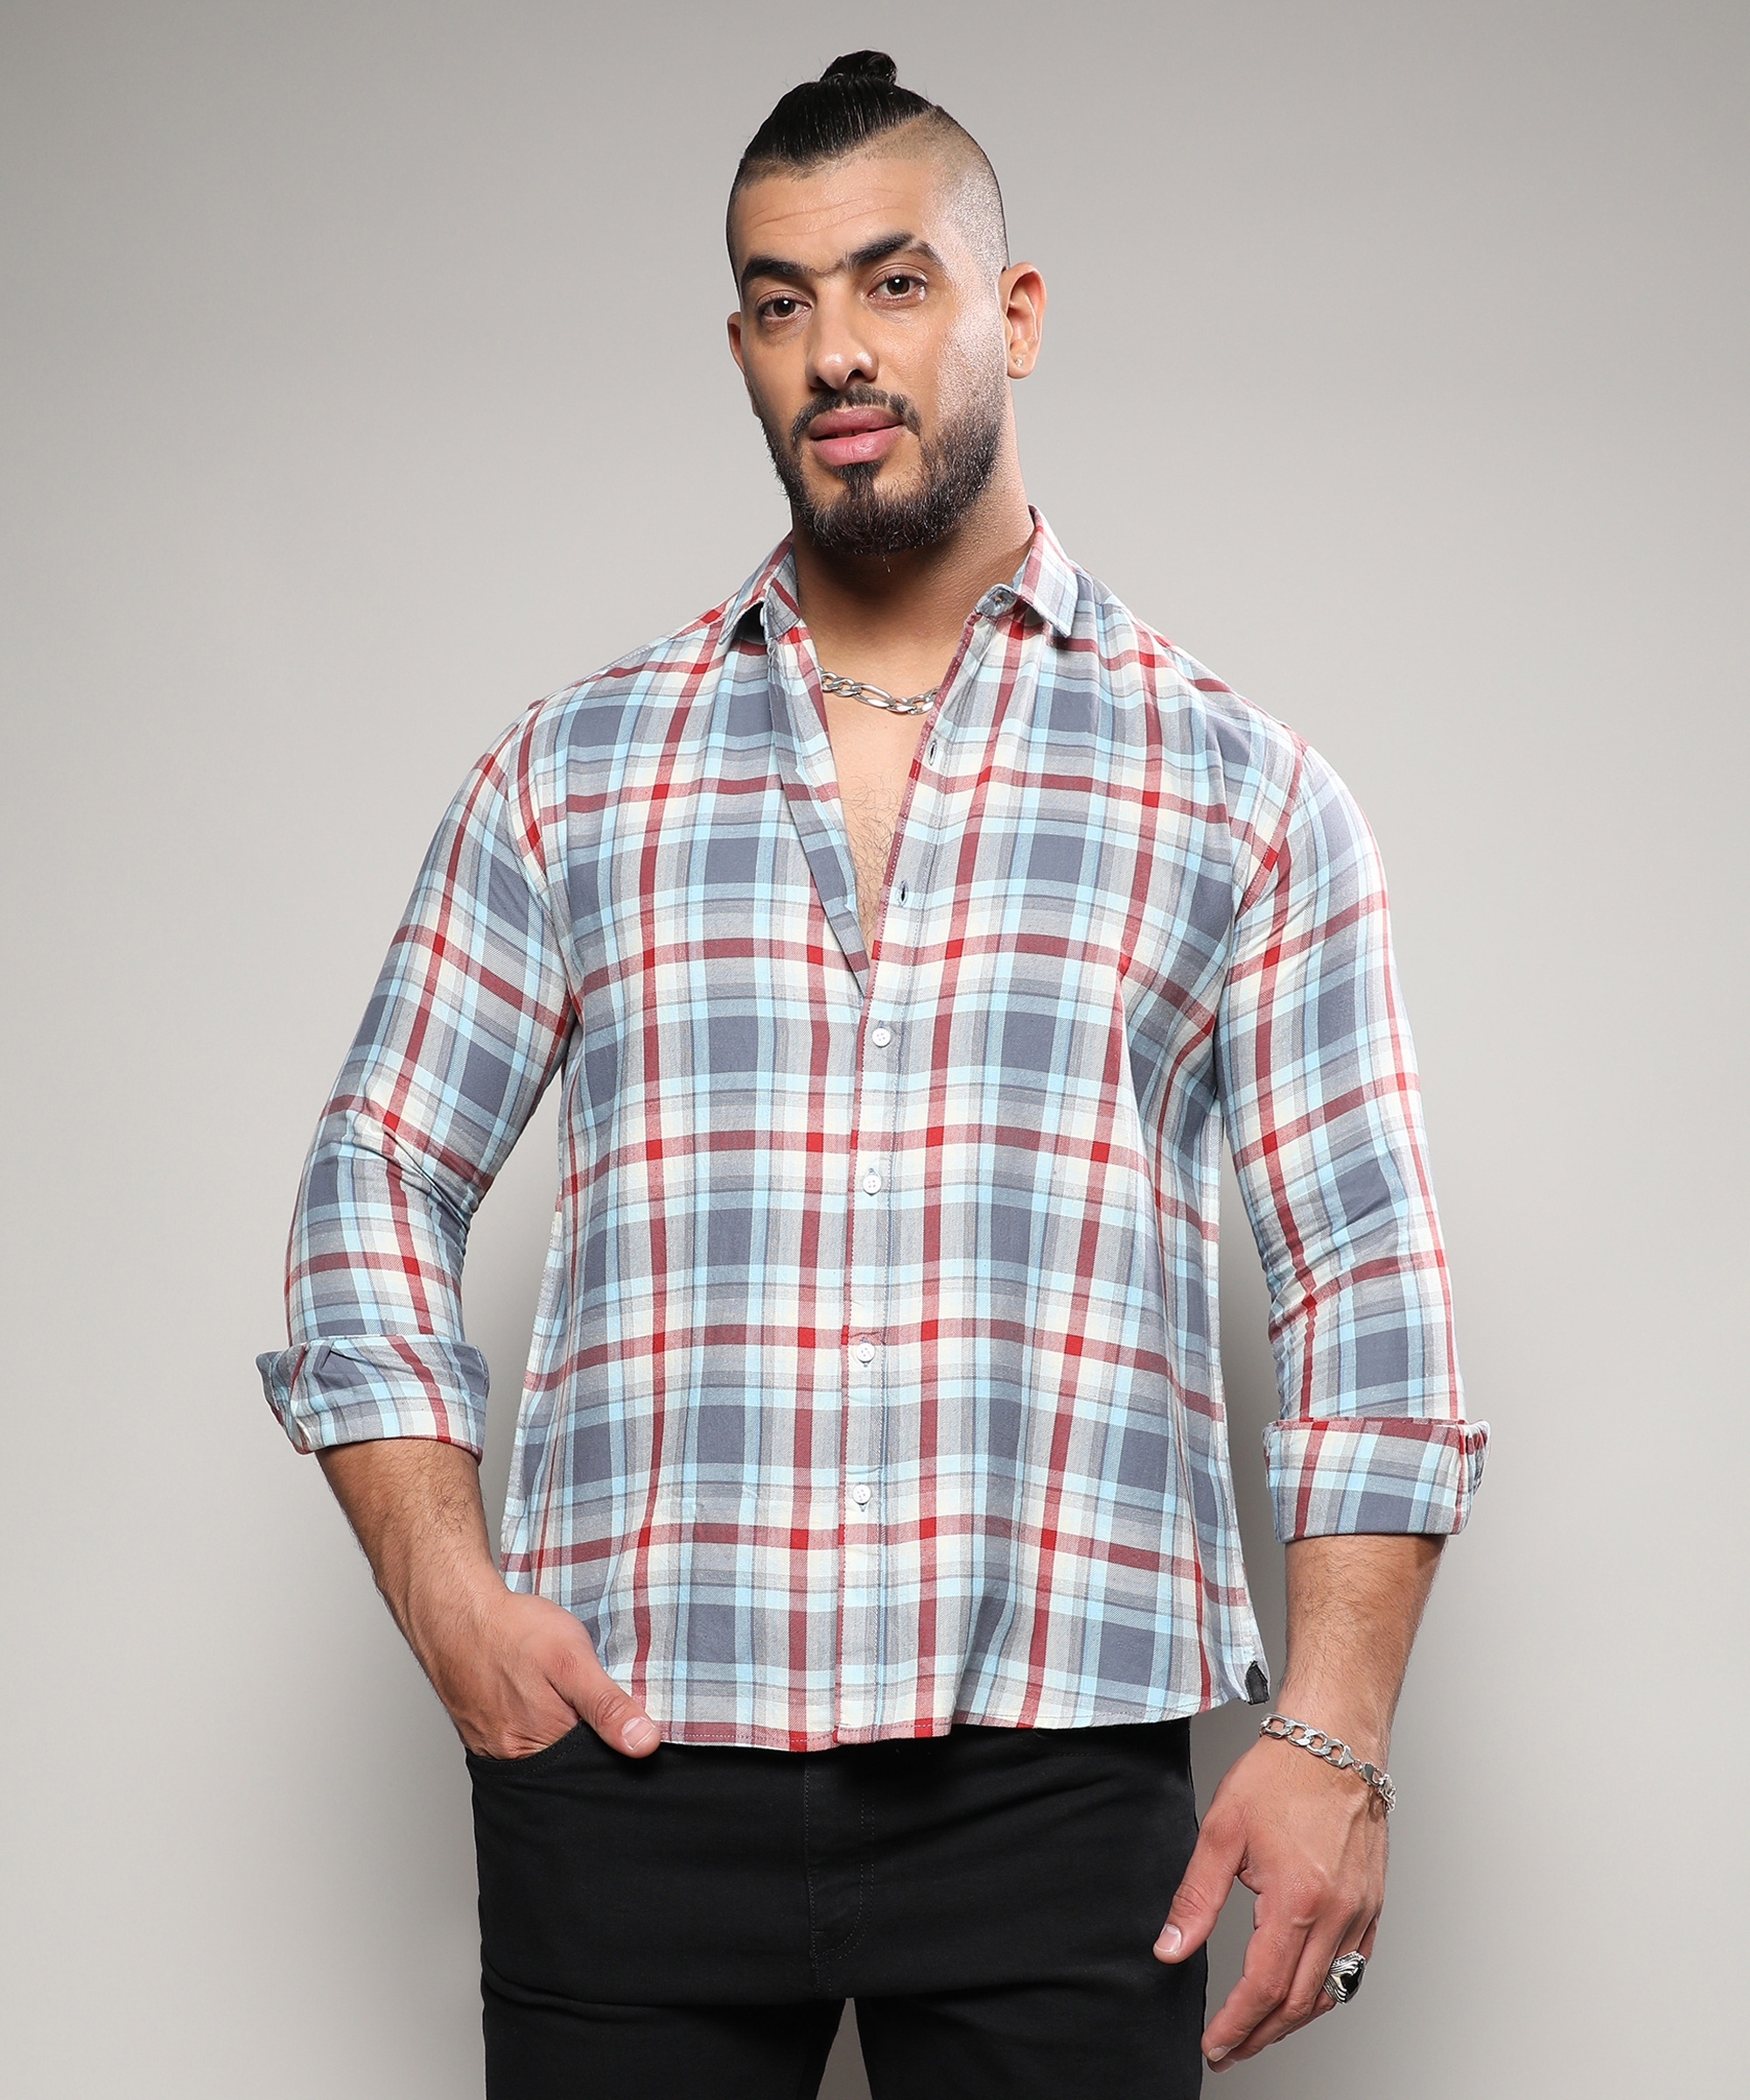 Instafab Plus | Men's Multicolour Tartan Plaid Shirt